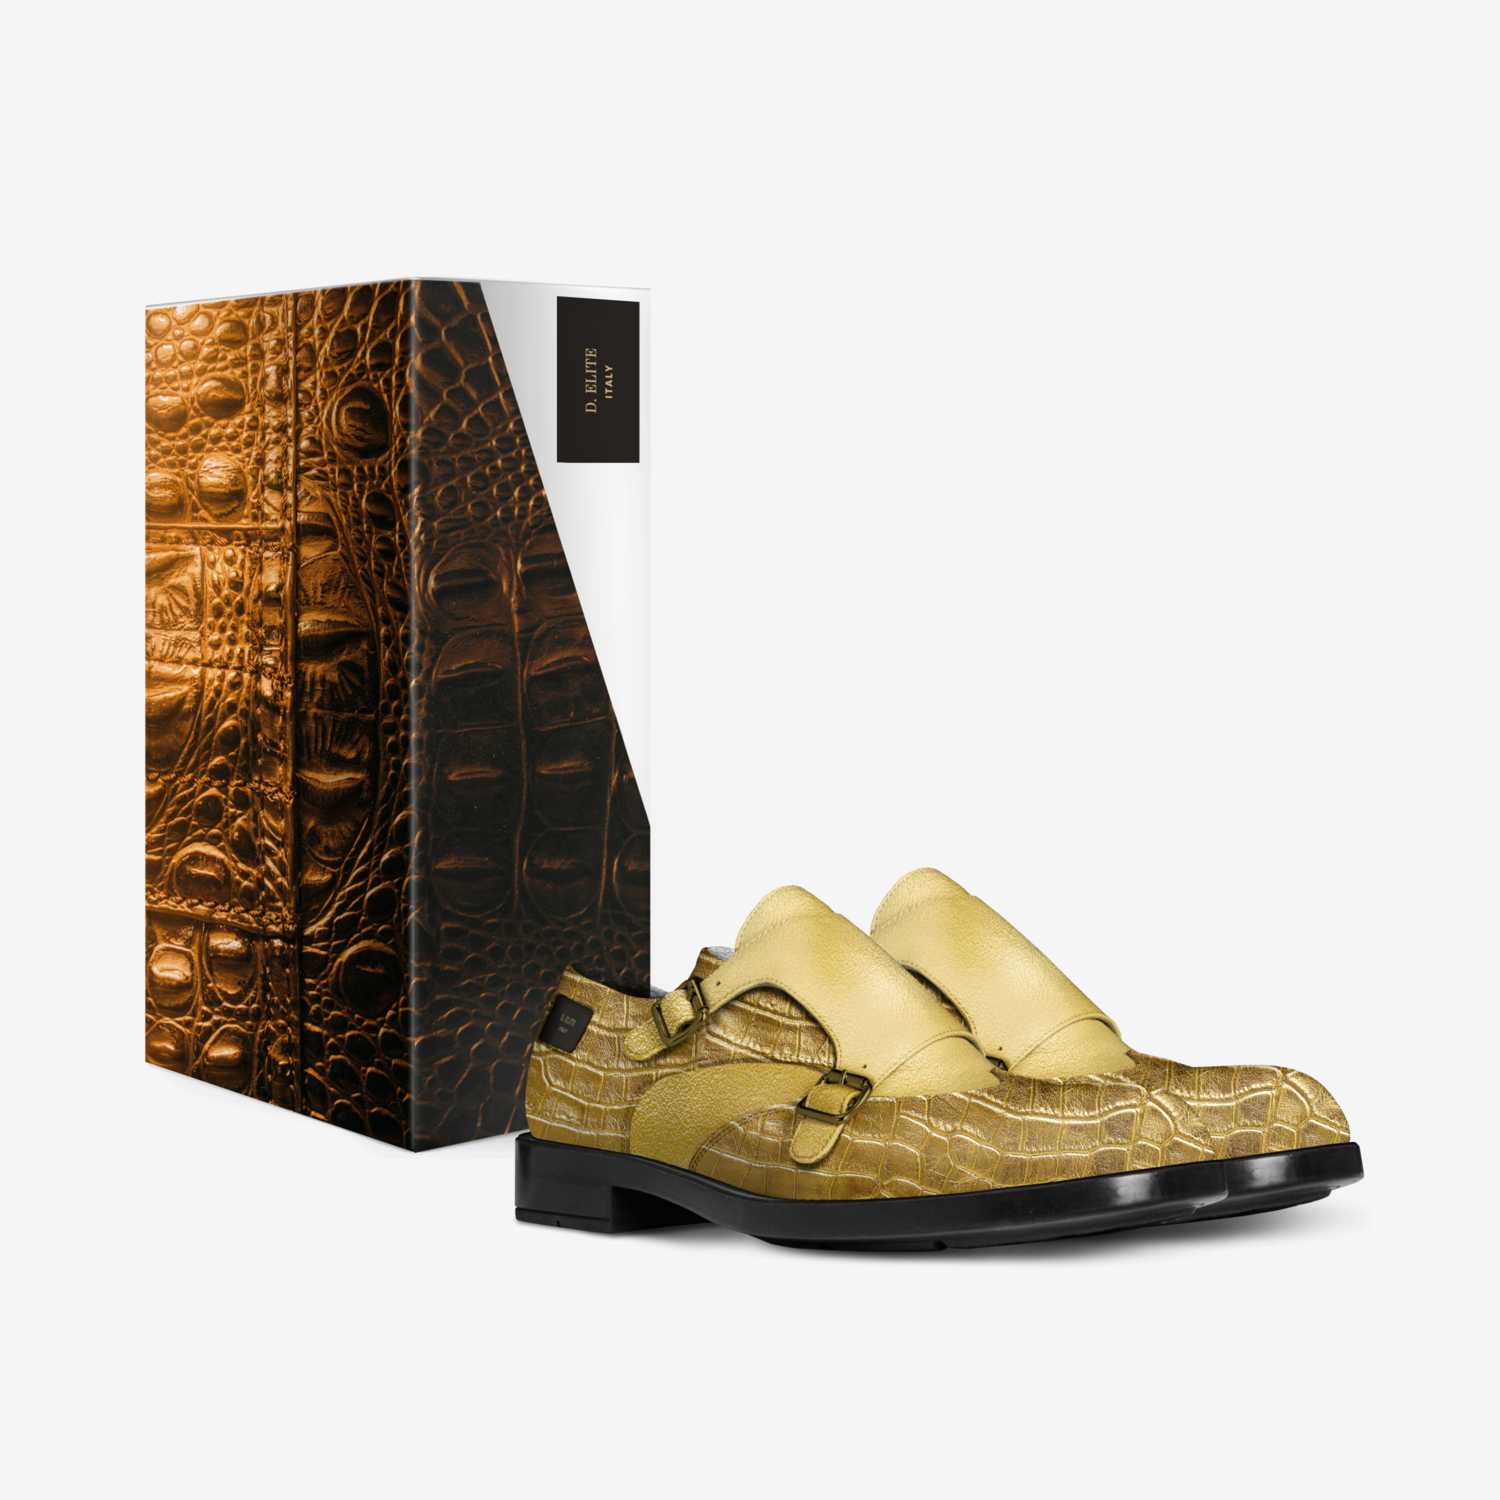 D. ELITE custom made in Italy shoes by Derek Moody | Box view